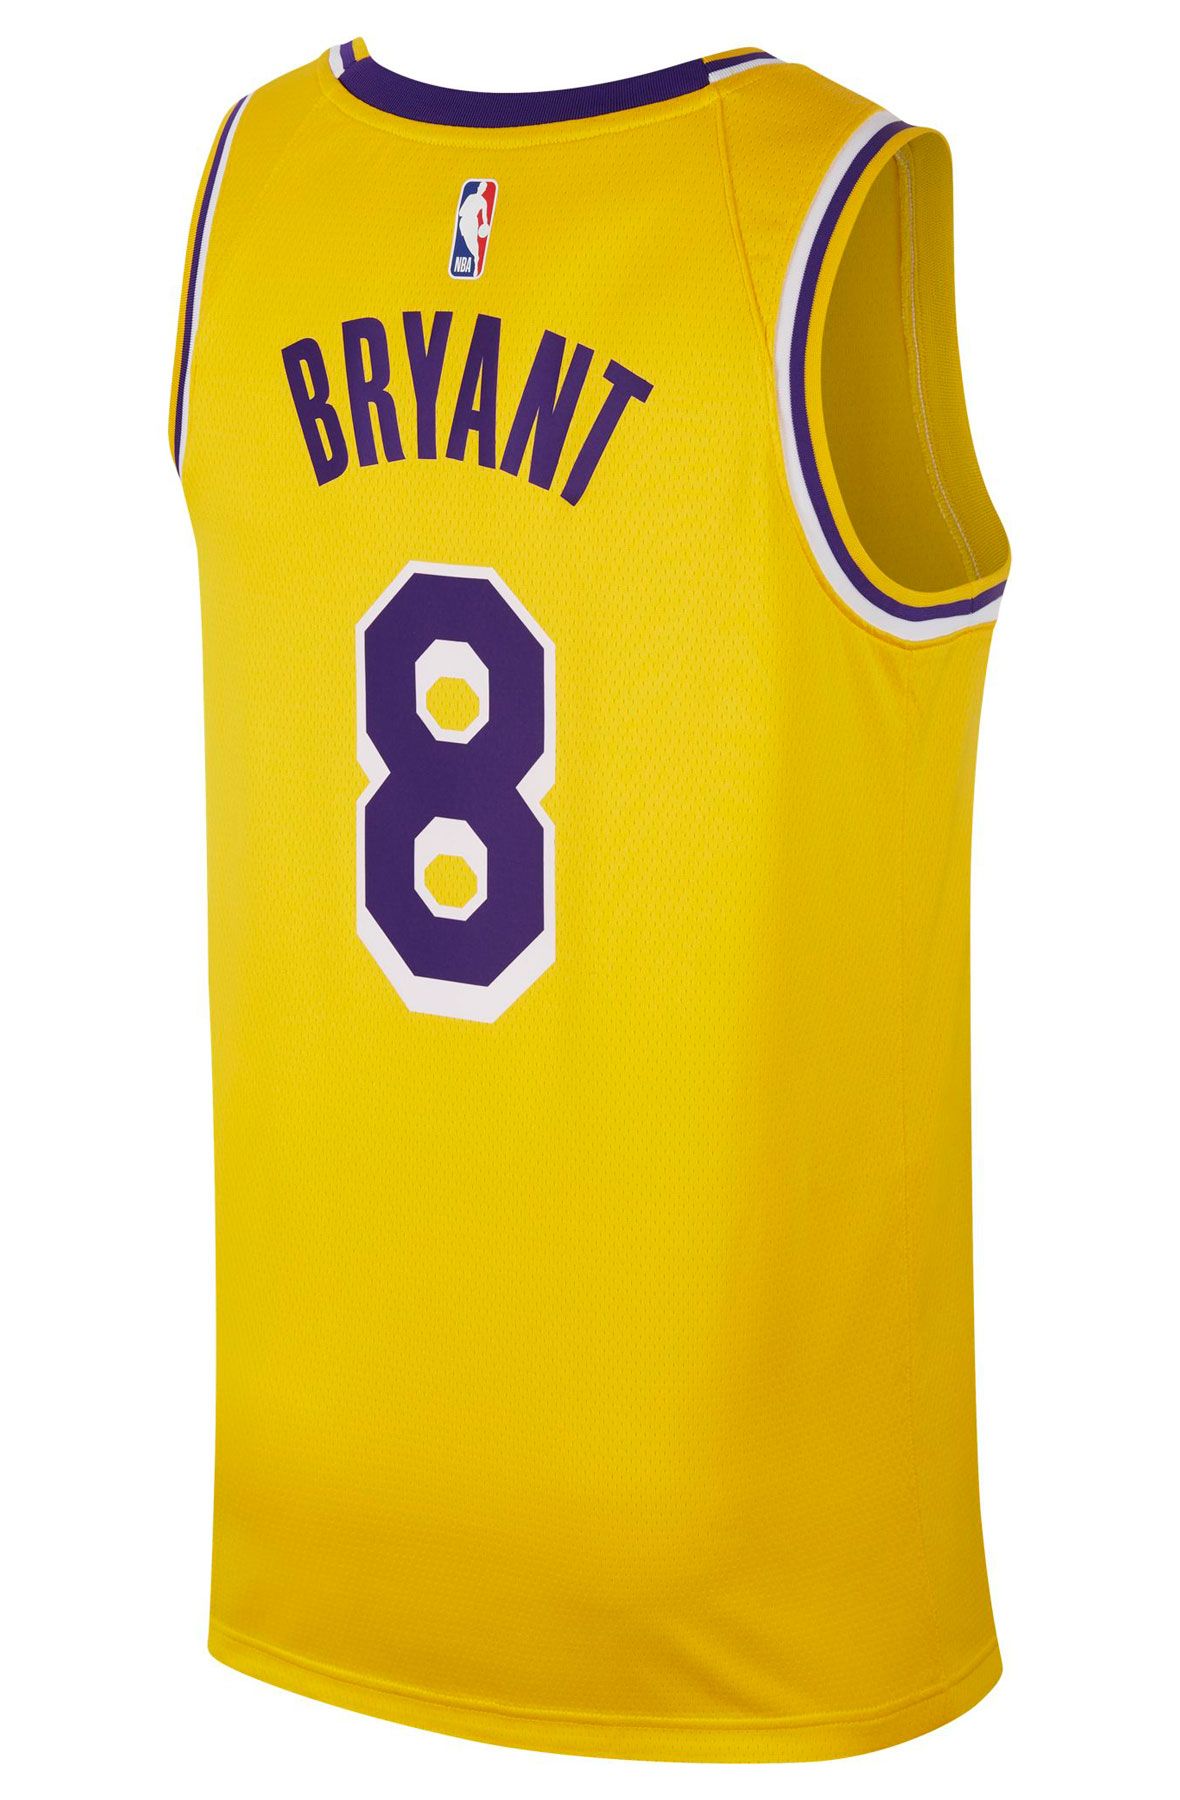 Nike NBA Los Angeles Lakers Icon Edition Kobe Bryant Swingman